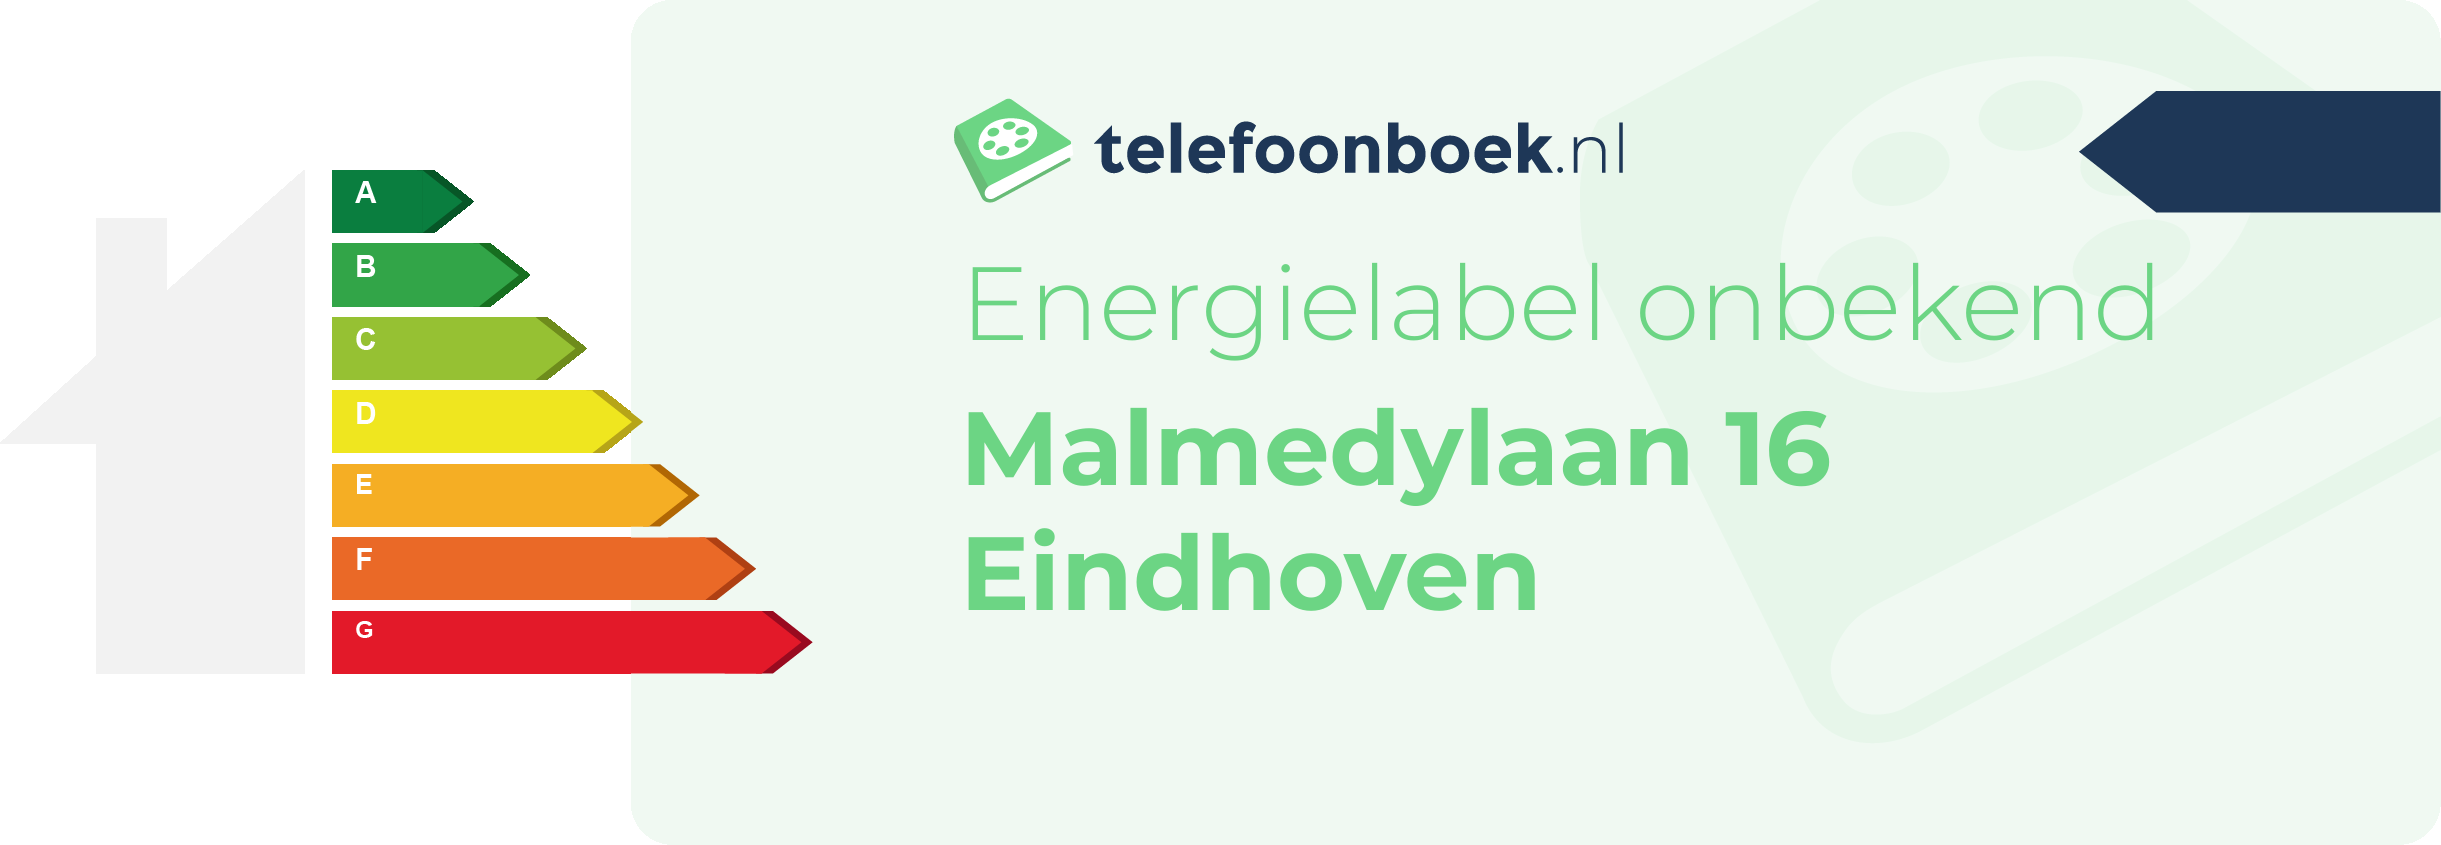 Energielabel Malmedylaan 16 Eindhoven